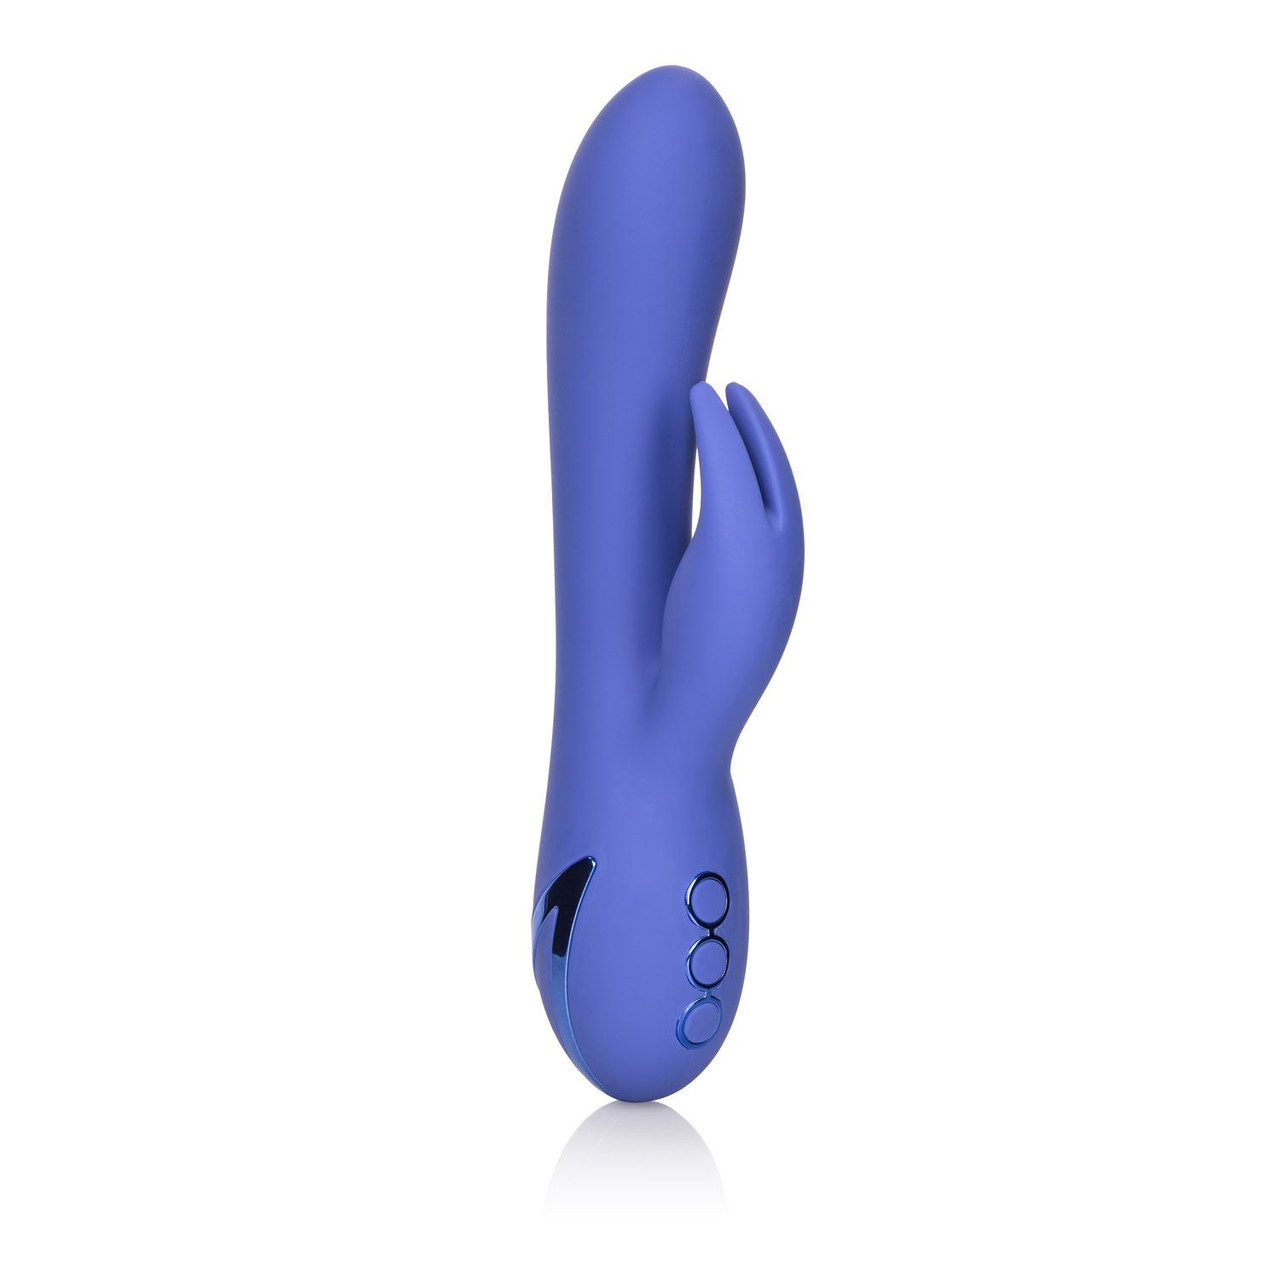 Buy Beverly Hills Bunny Rabbit Vibrator for Women Online | CondomDepot